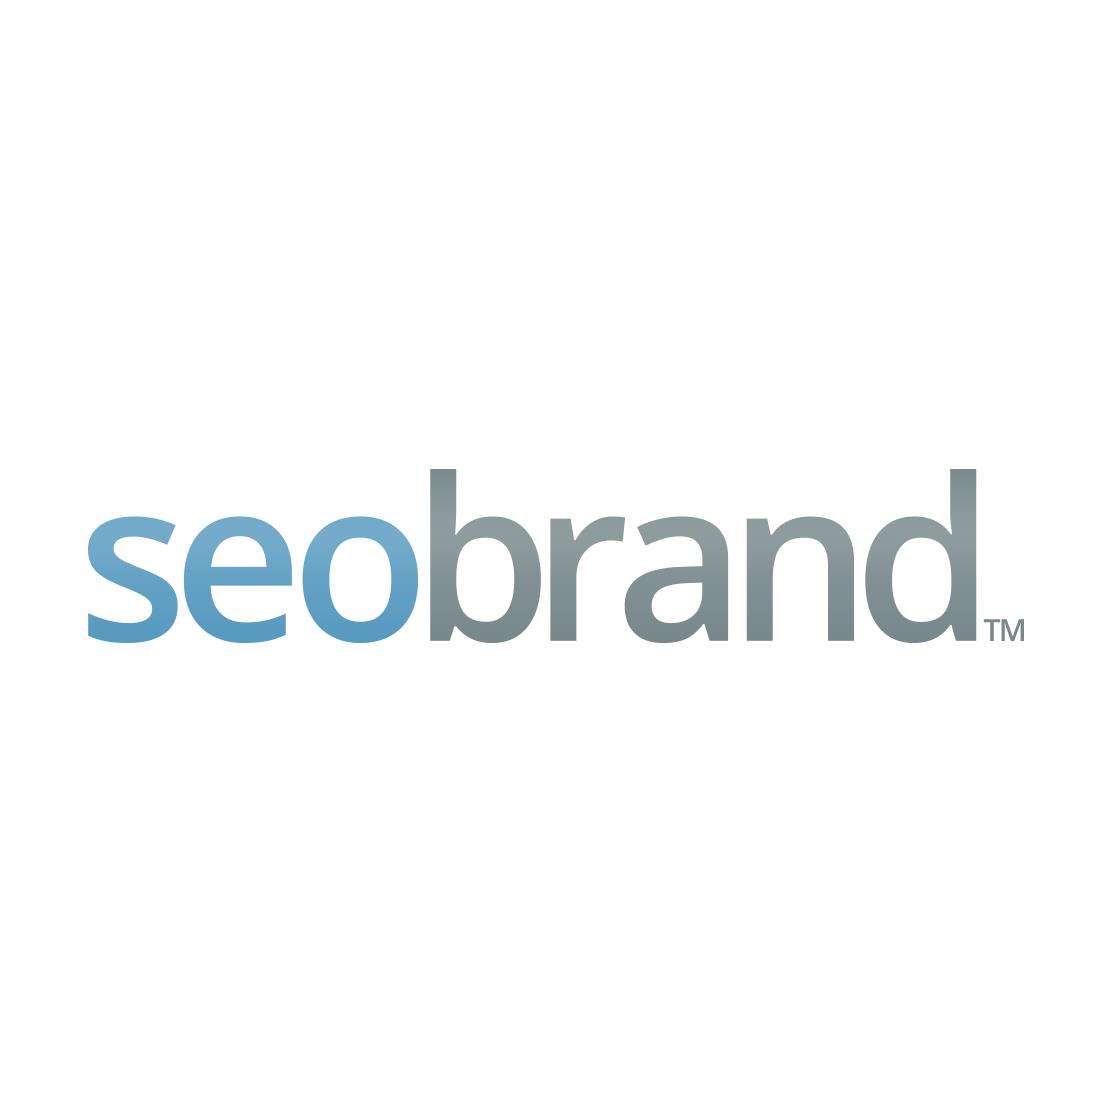 Best Boston SEO Agency Logo: SEO Brand